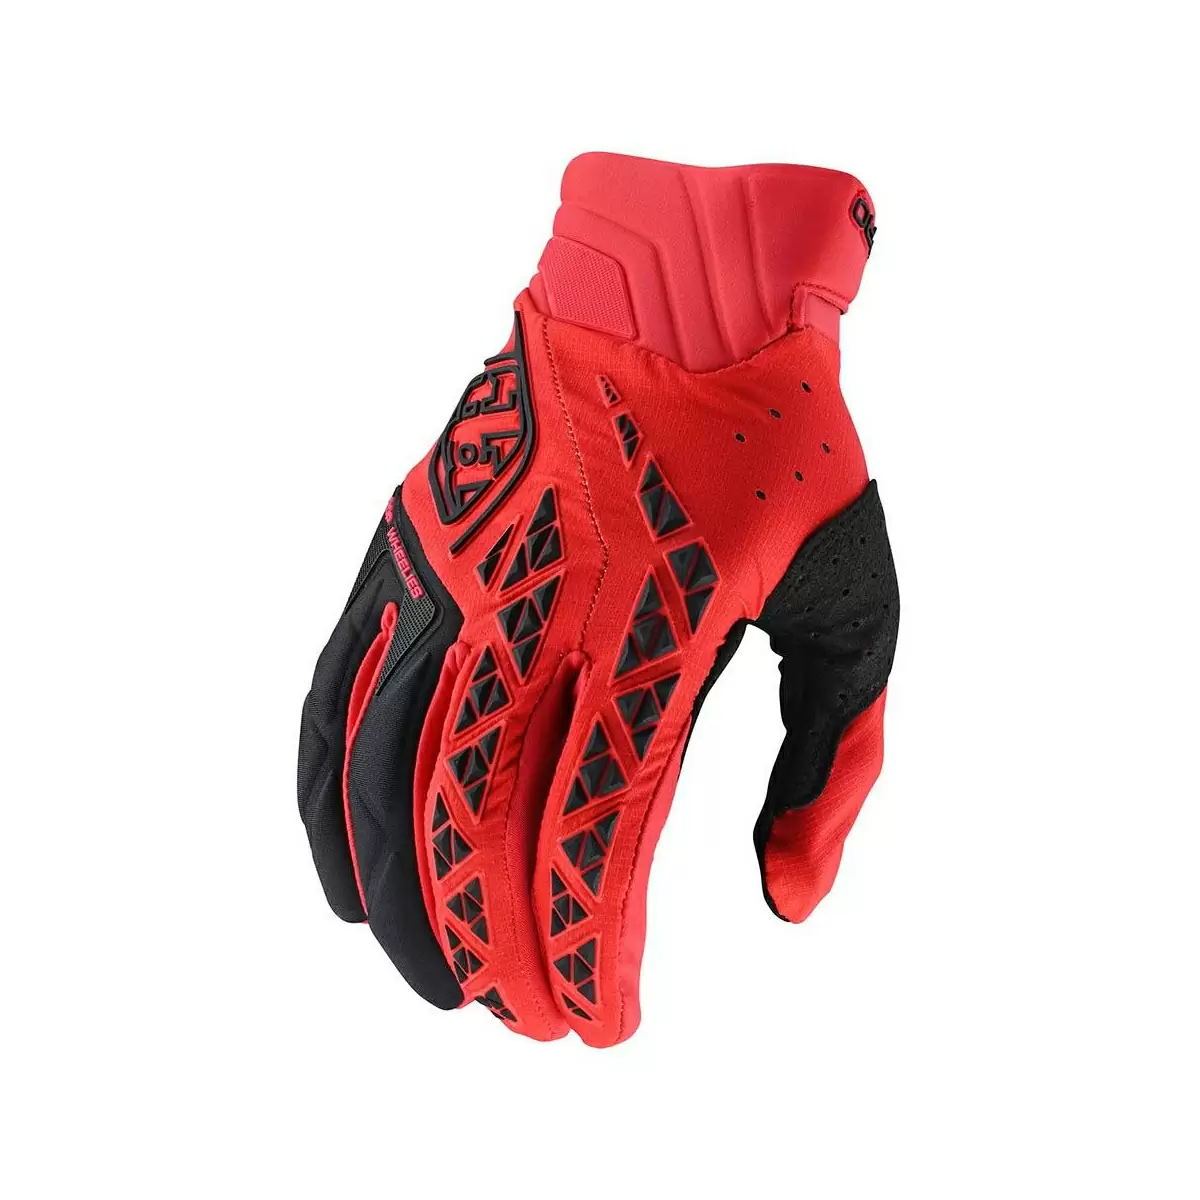 Gloves SE Pro Black/Red Size XL - image